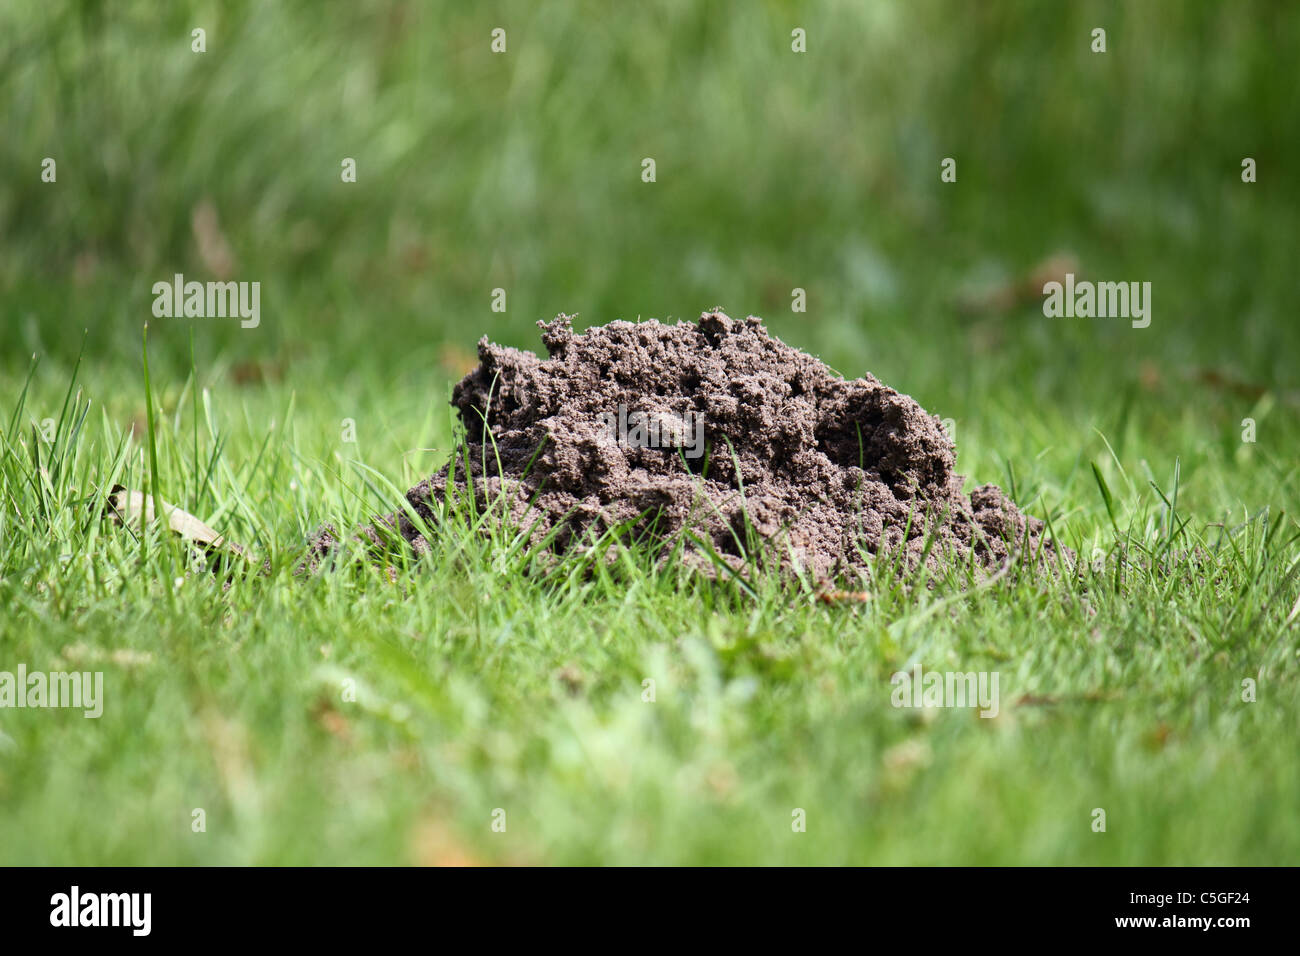 a molehill in green grass Stock Photo